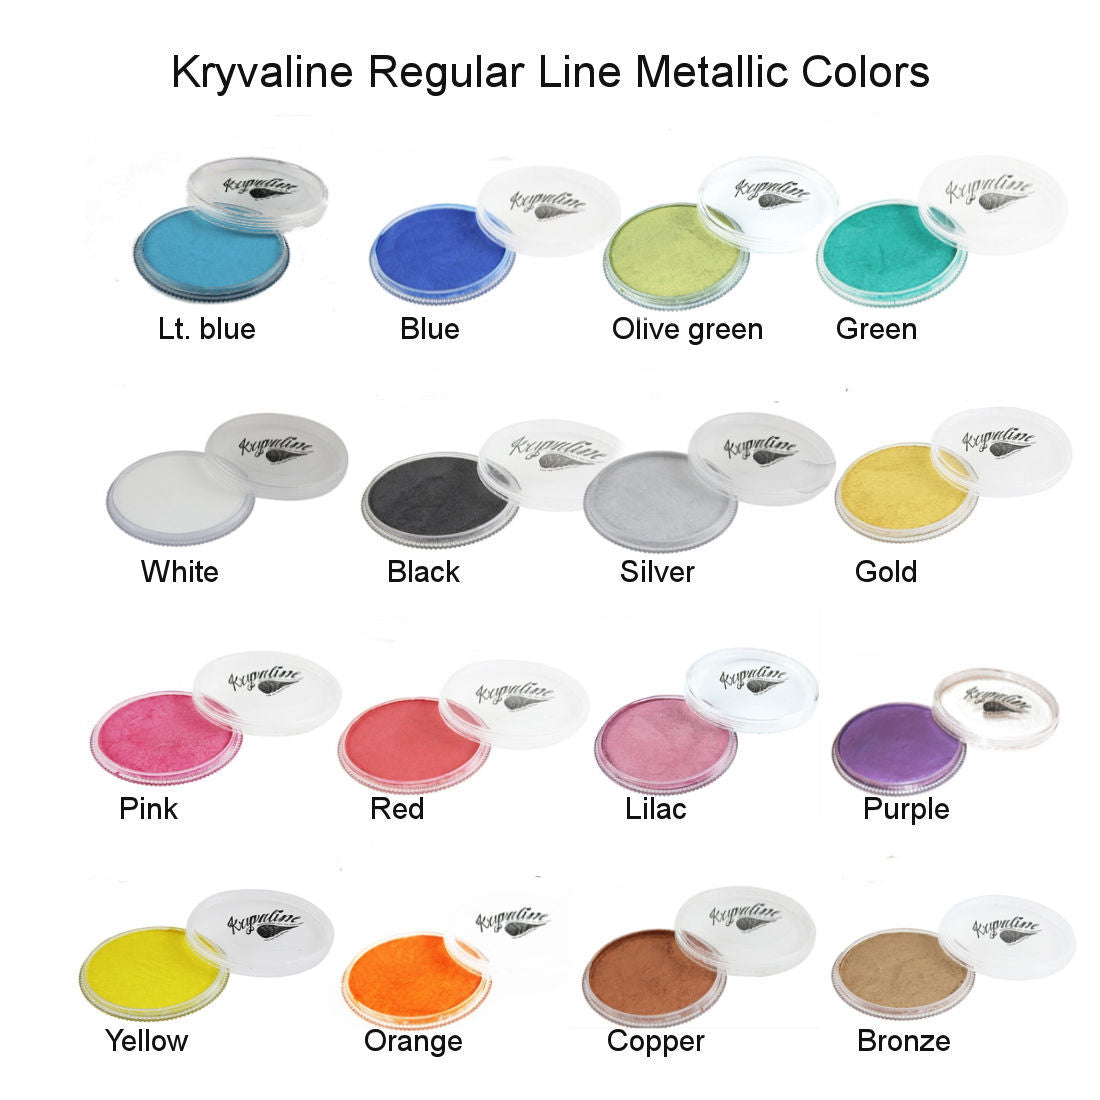 Kryvaline Face and body Paint Metallic Colors 30g Green - Kryvaline Body Art Makeup | Glitter Tattoos, Face & Body Paint, Design - Kryvaline Body Art Makeup